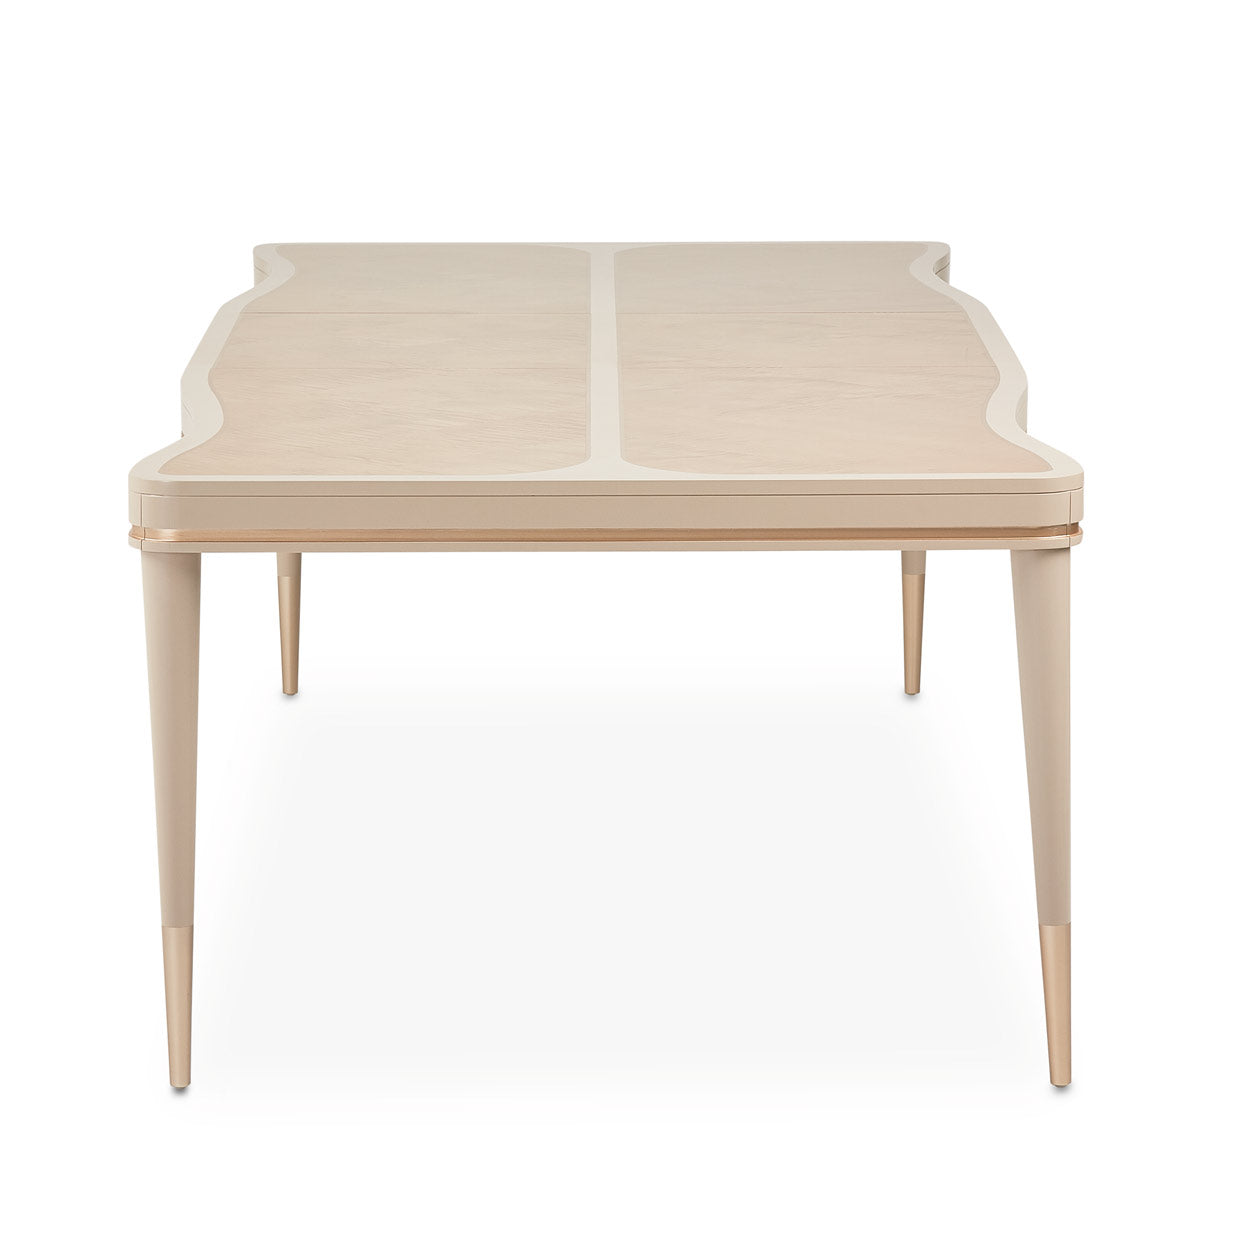 MALIBU CREST 4 Leg Rectangular Dining Table (Includes: 2 X 24 Leaves) - Dream art Gallery